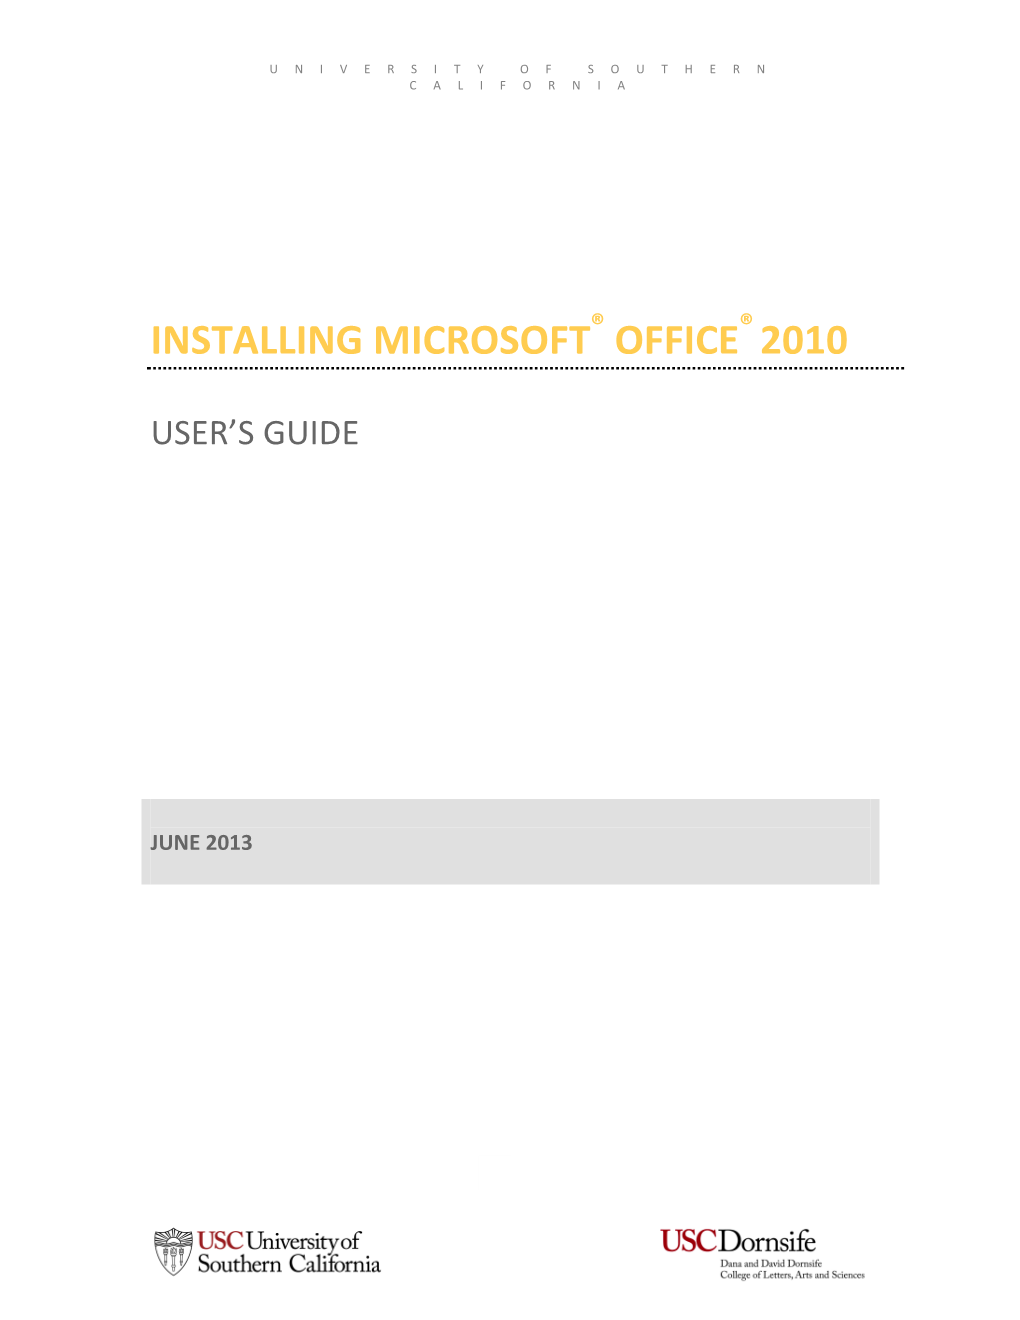 Installing Microsoft Office 2010